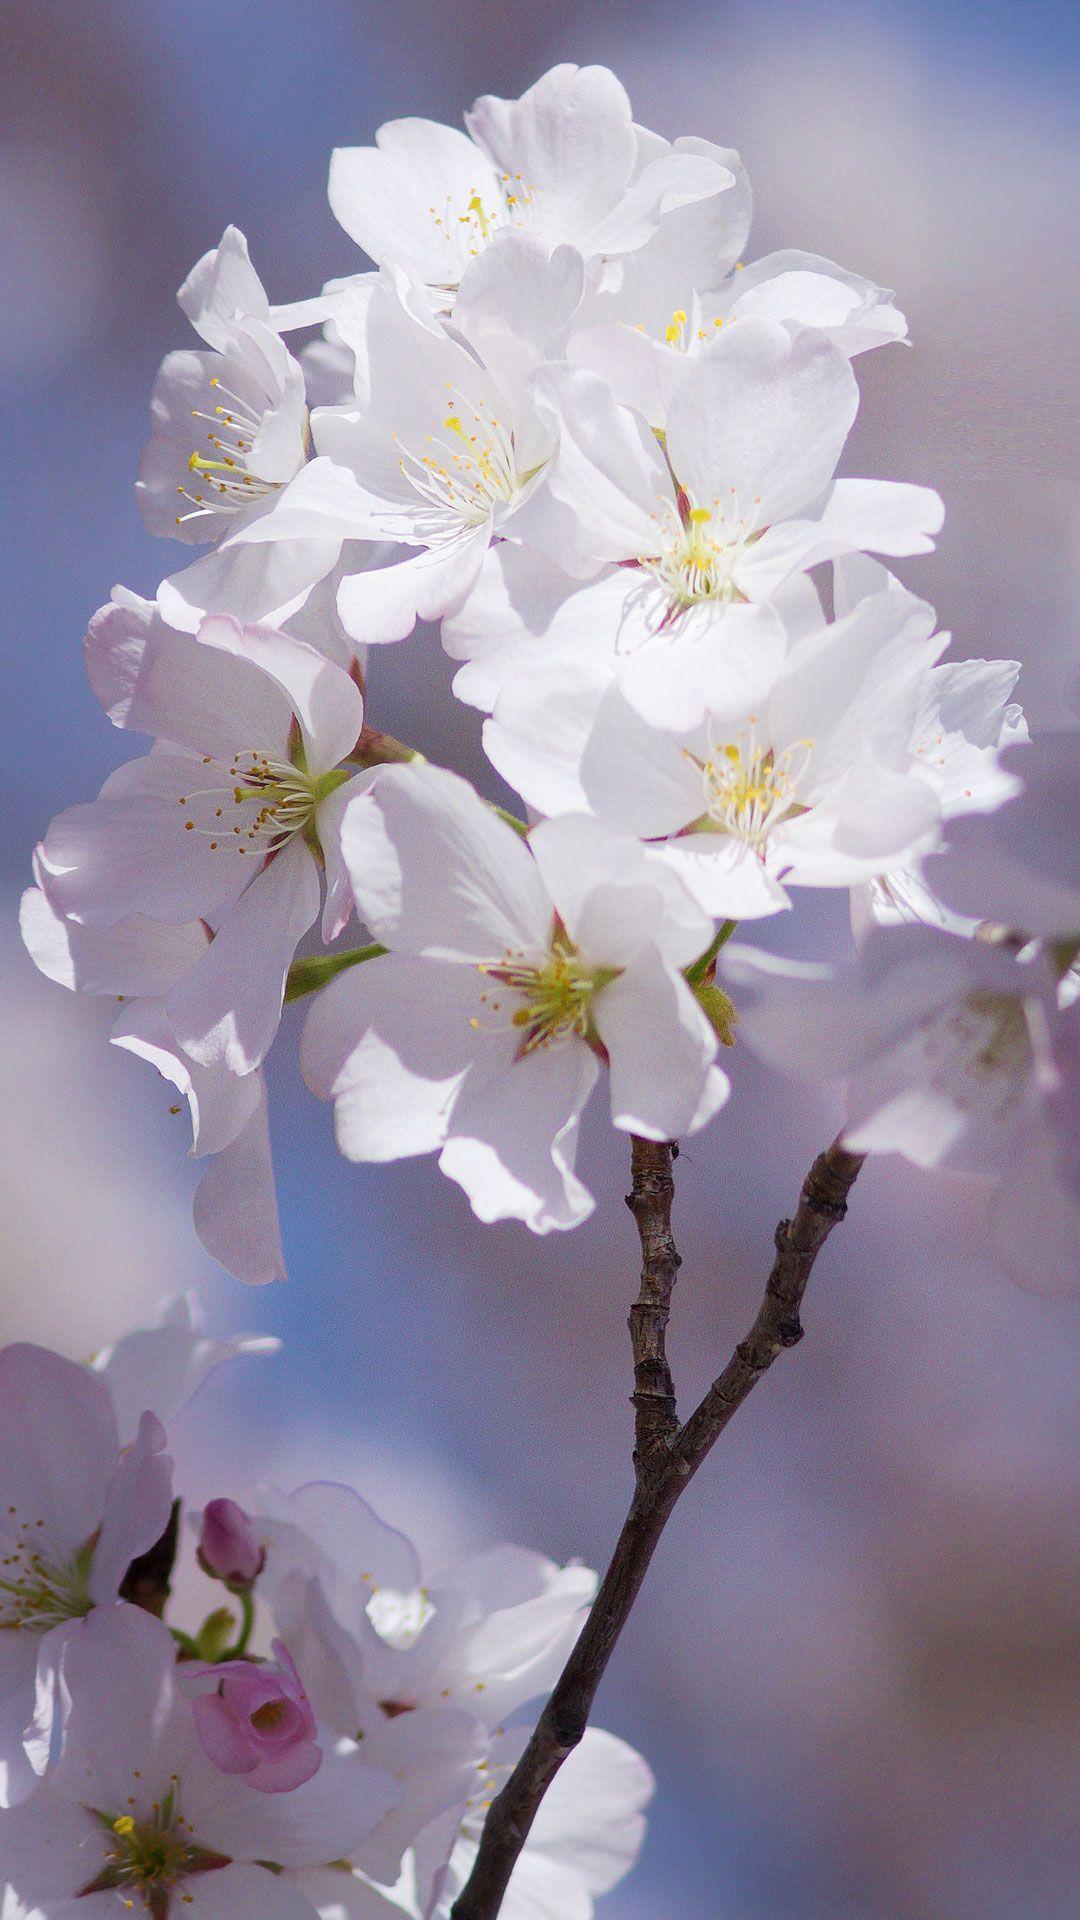 Cherry and Sakura Flowers Mobile Wallpaper: Image